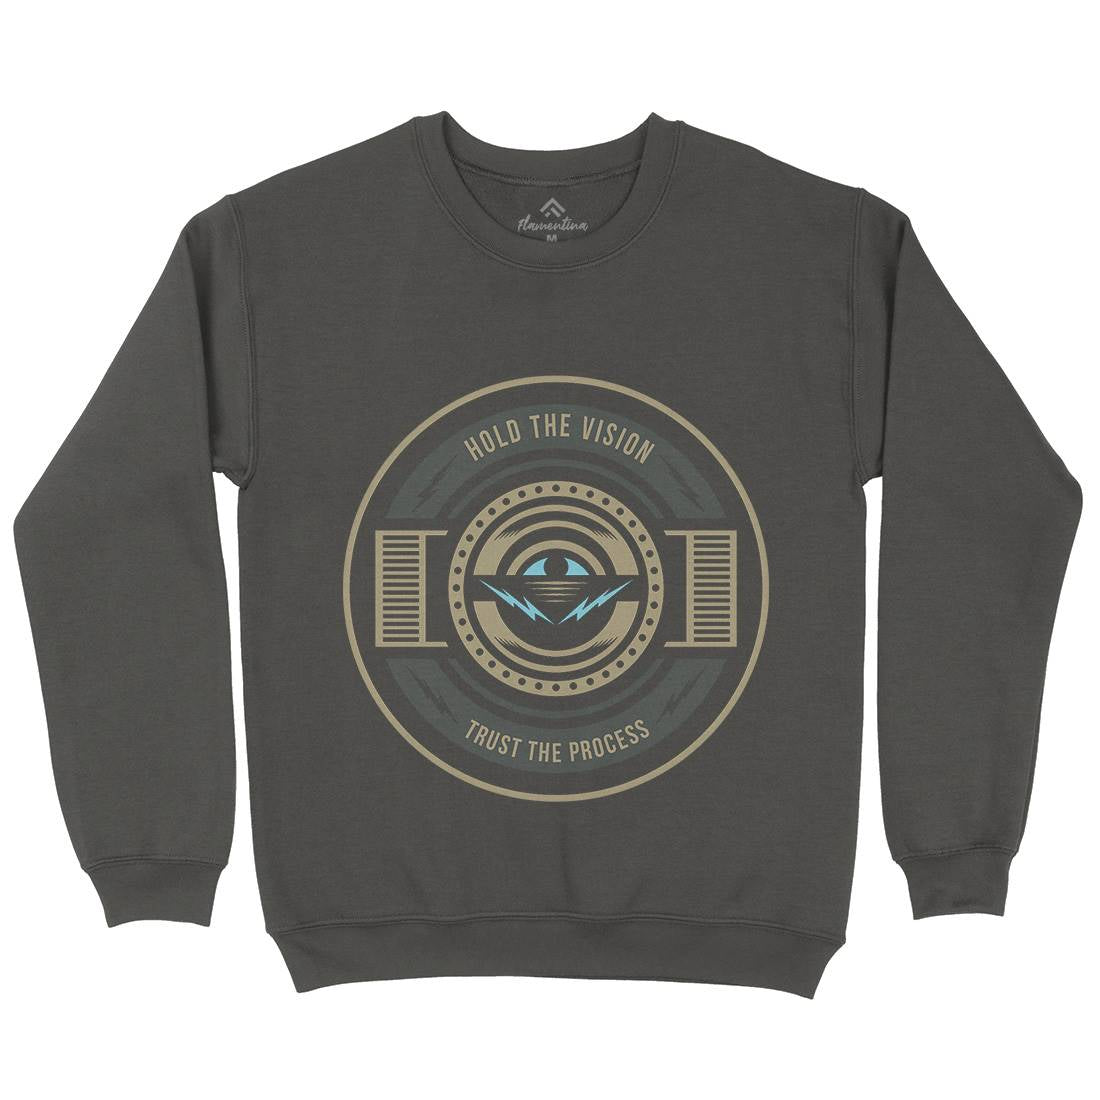 Hold The Vision Kids Crew Neck Sweatshirt Illuminati A331